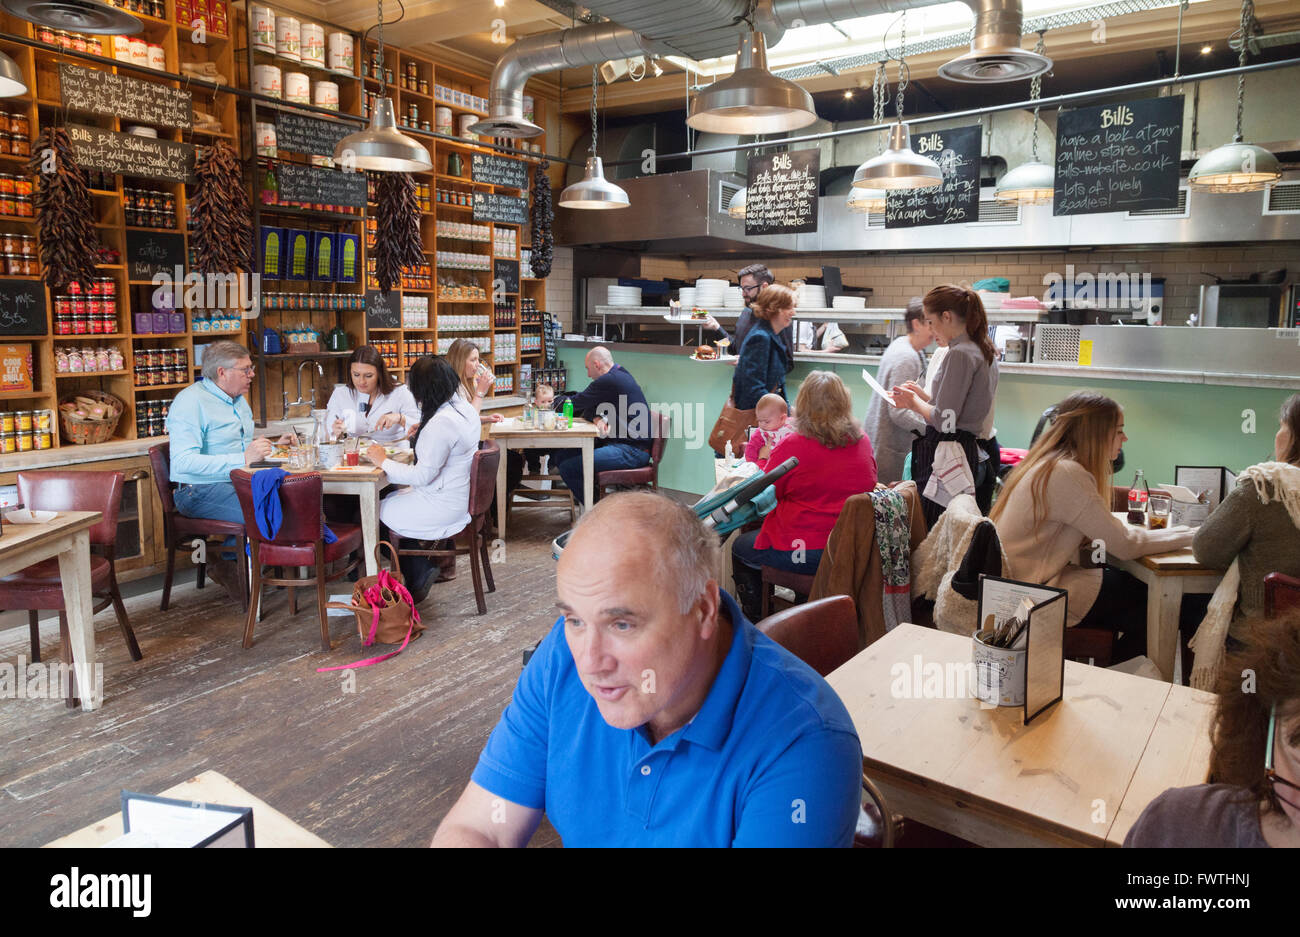 People eating in a restaurant interior, Bill's restaurant, Reading, Berkshire UK Stock Photo